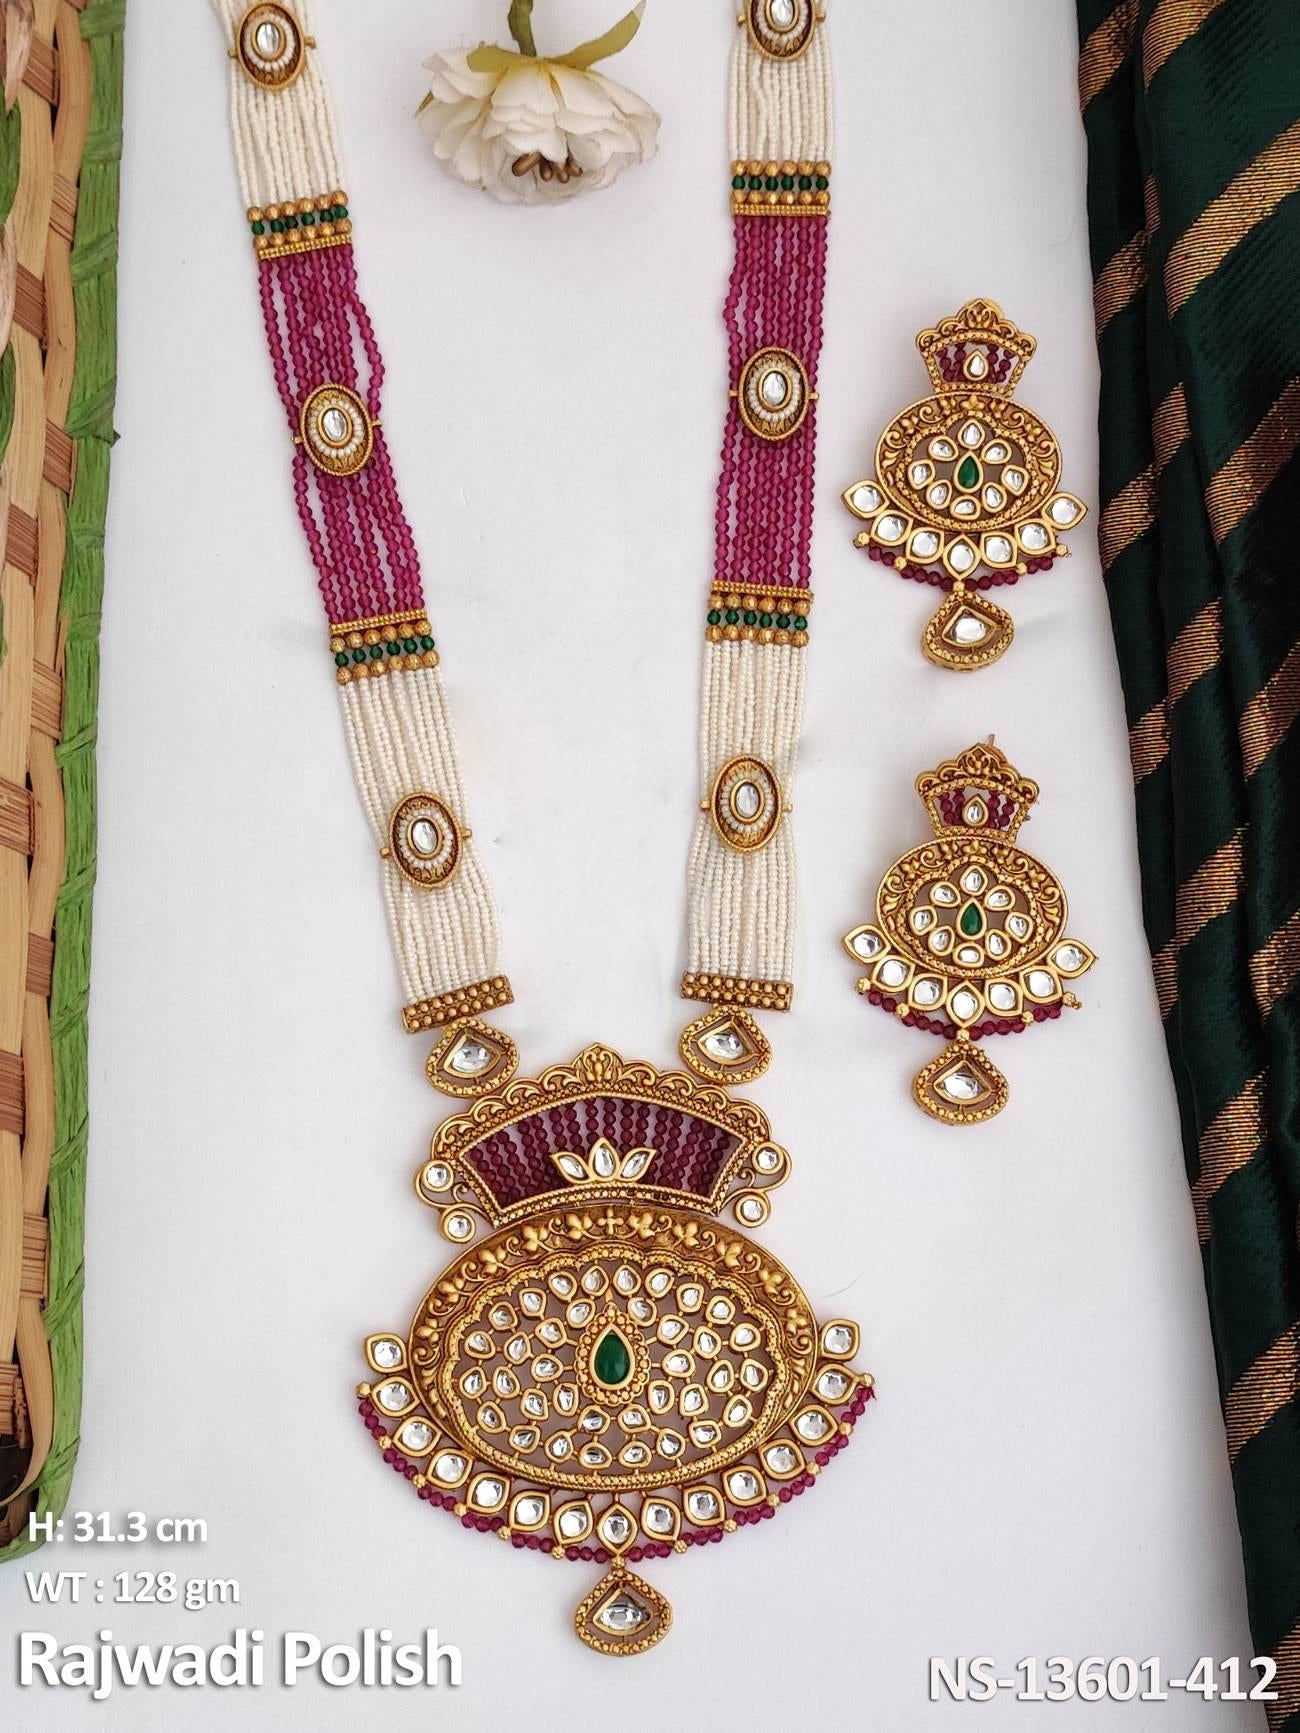 This stunning Rajwadi Polish Kemp Jewellery Kemp Long Necklace Set